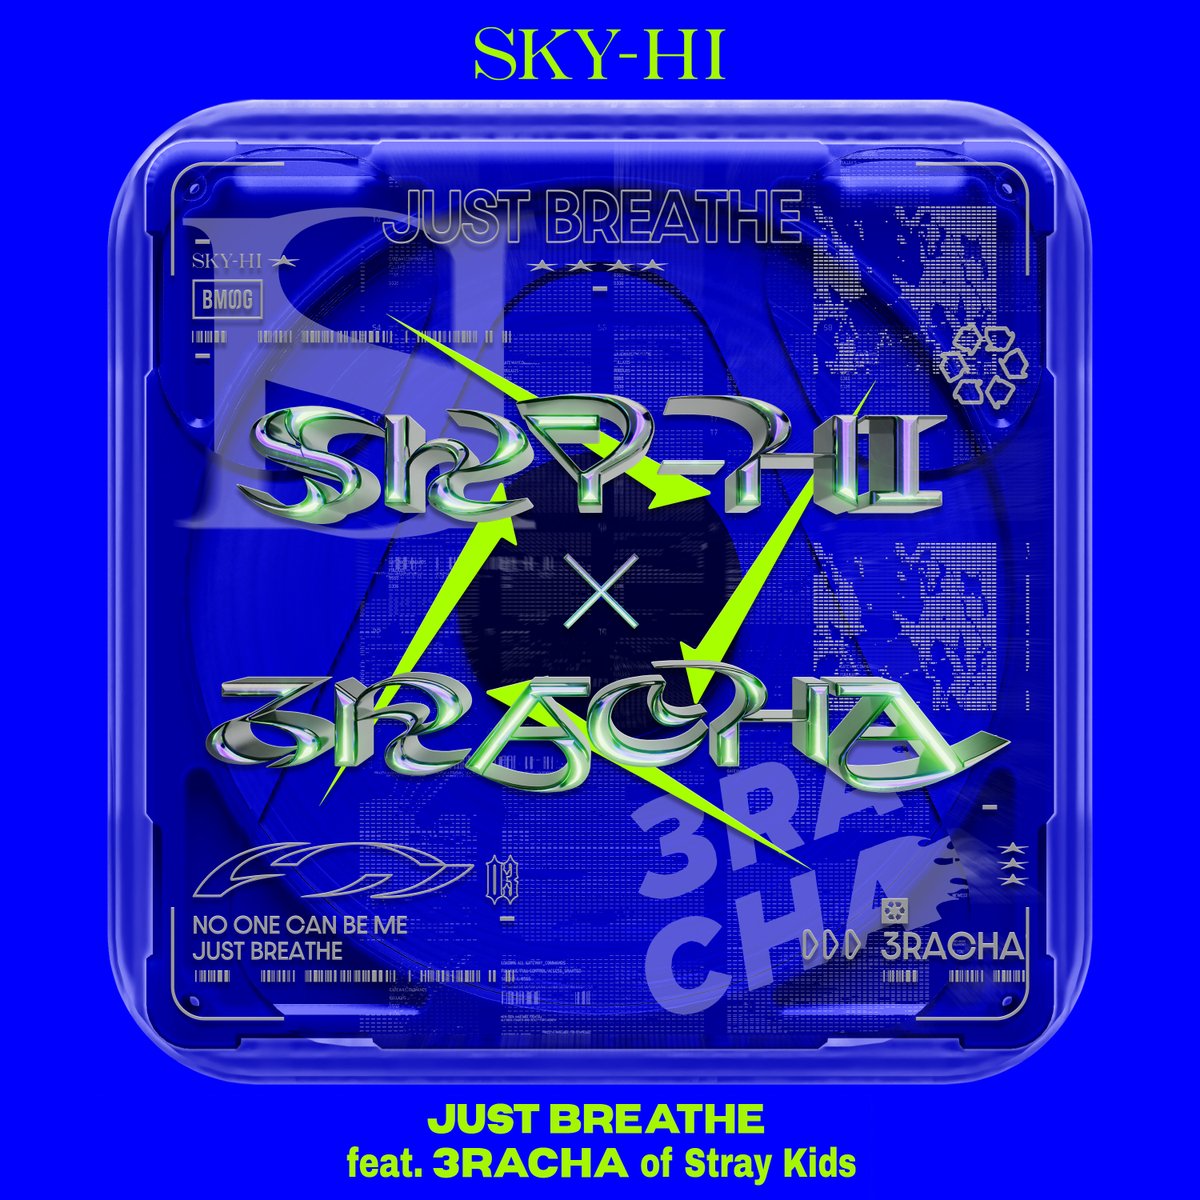 SKY-HI Digital Single 'JUST BREATHE feat. 3RACHA of Stray Kids'

Released Online
YouTube Music bit.ly/3JDML2j

#StrayKids #스트레이키즈
#방찬 #BangChan
#창빈 #Changbin
#한 #HAN 
#3RACHA
#JUSTBREATHE
#SKYHI
#YouMakeStrayKidsStay